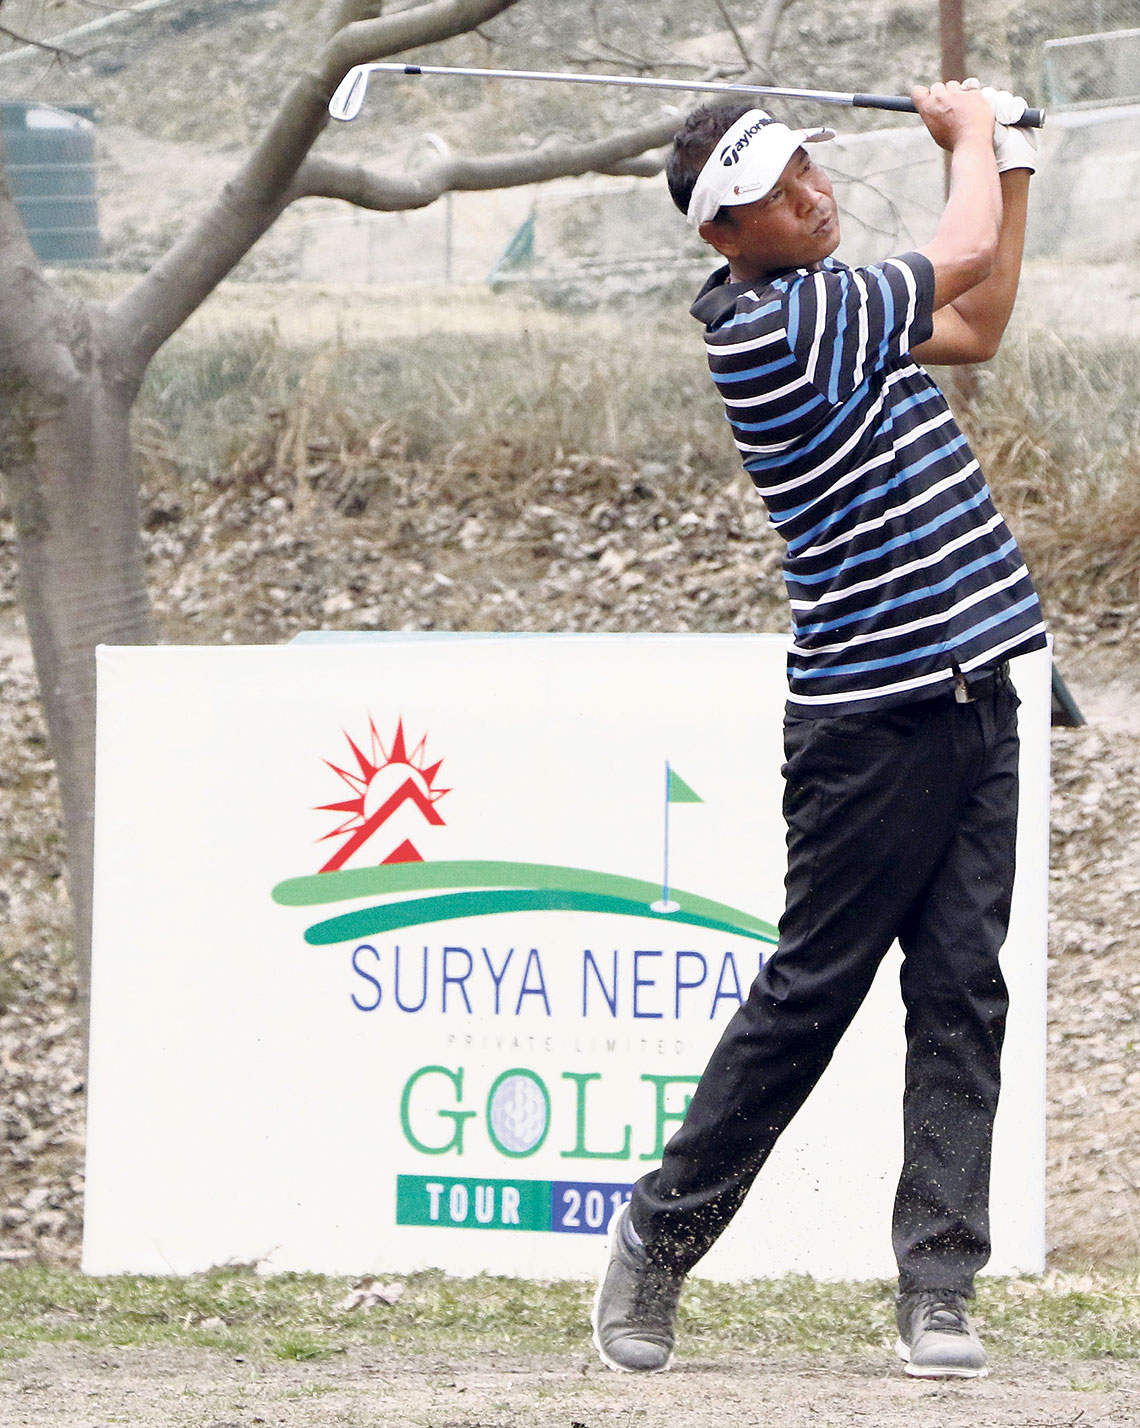 Nagarkoti aiming for fourth title of the season